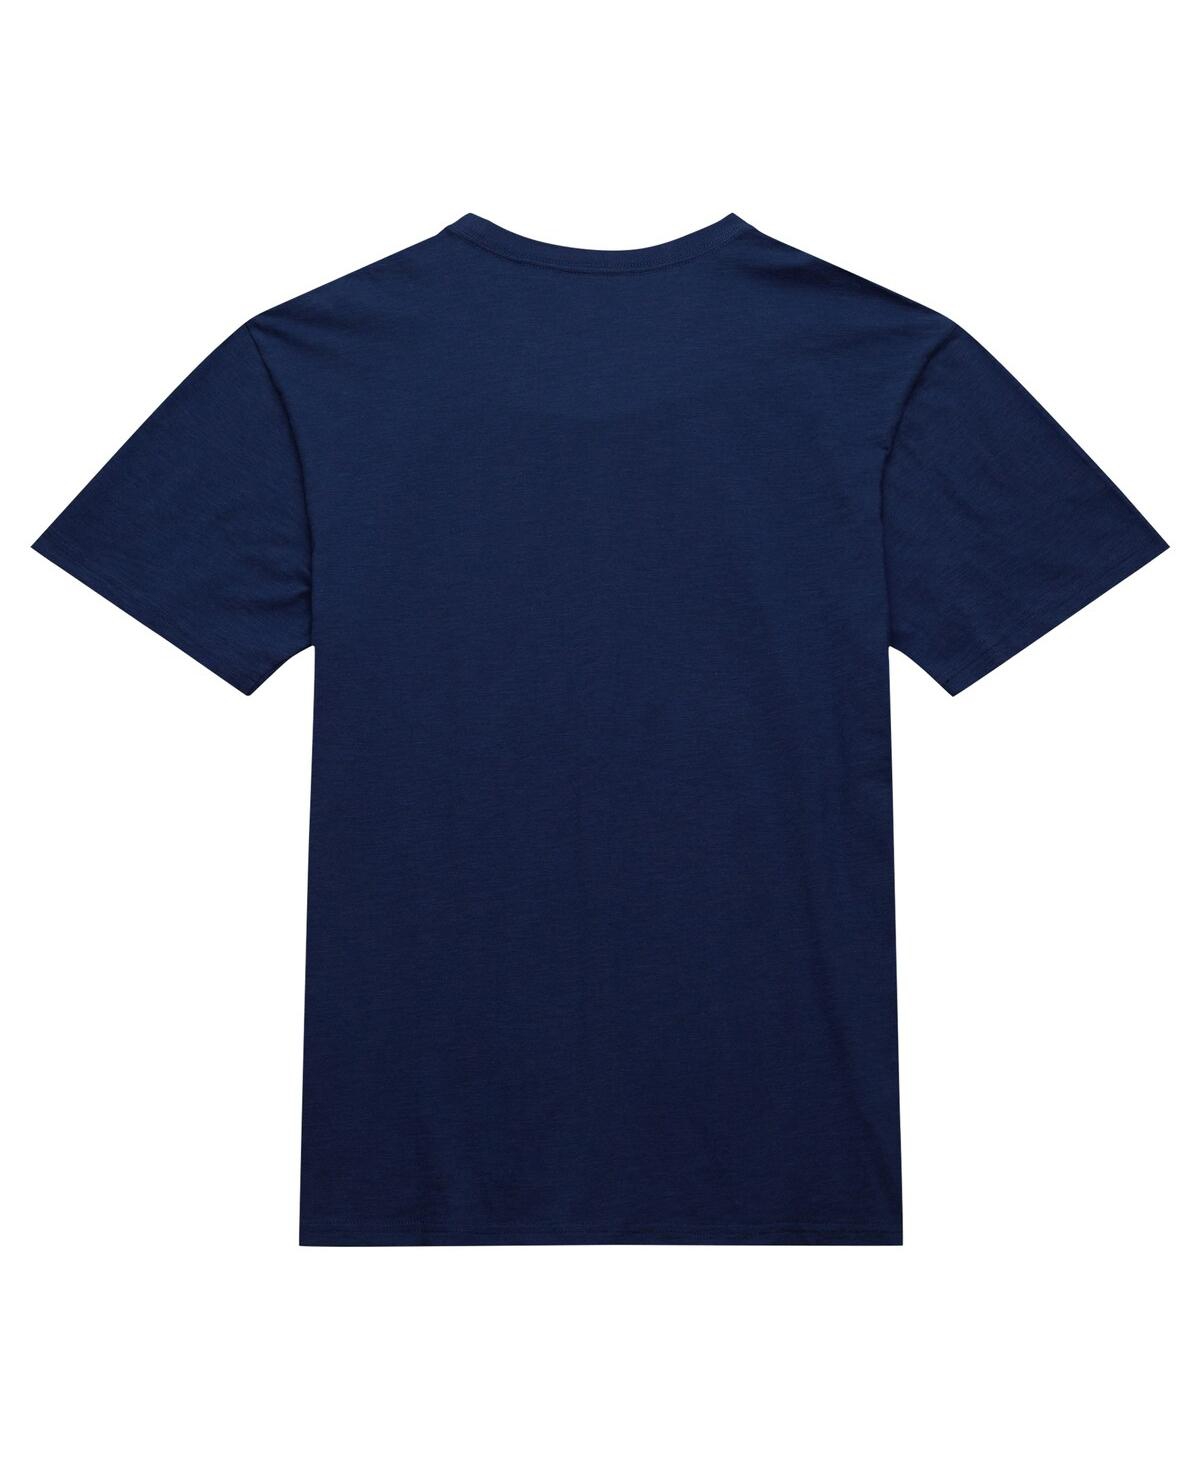 Shop Mitchell & Ness Men's  Navy Washington Capitals Legendary Slub T-shirt